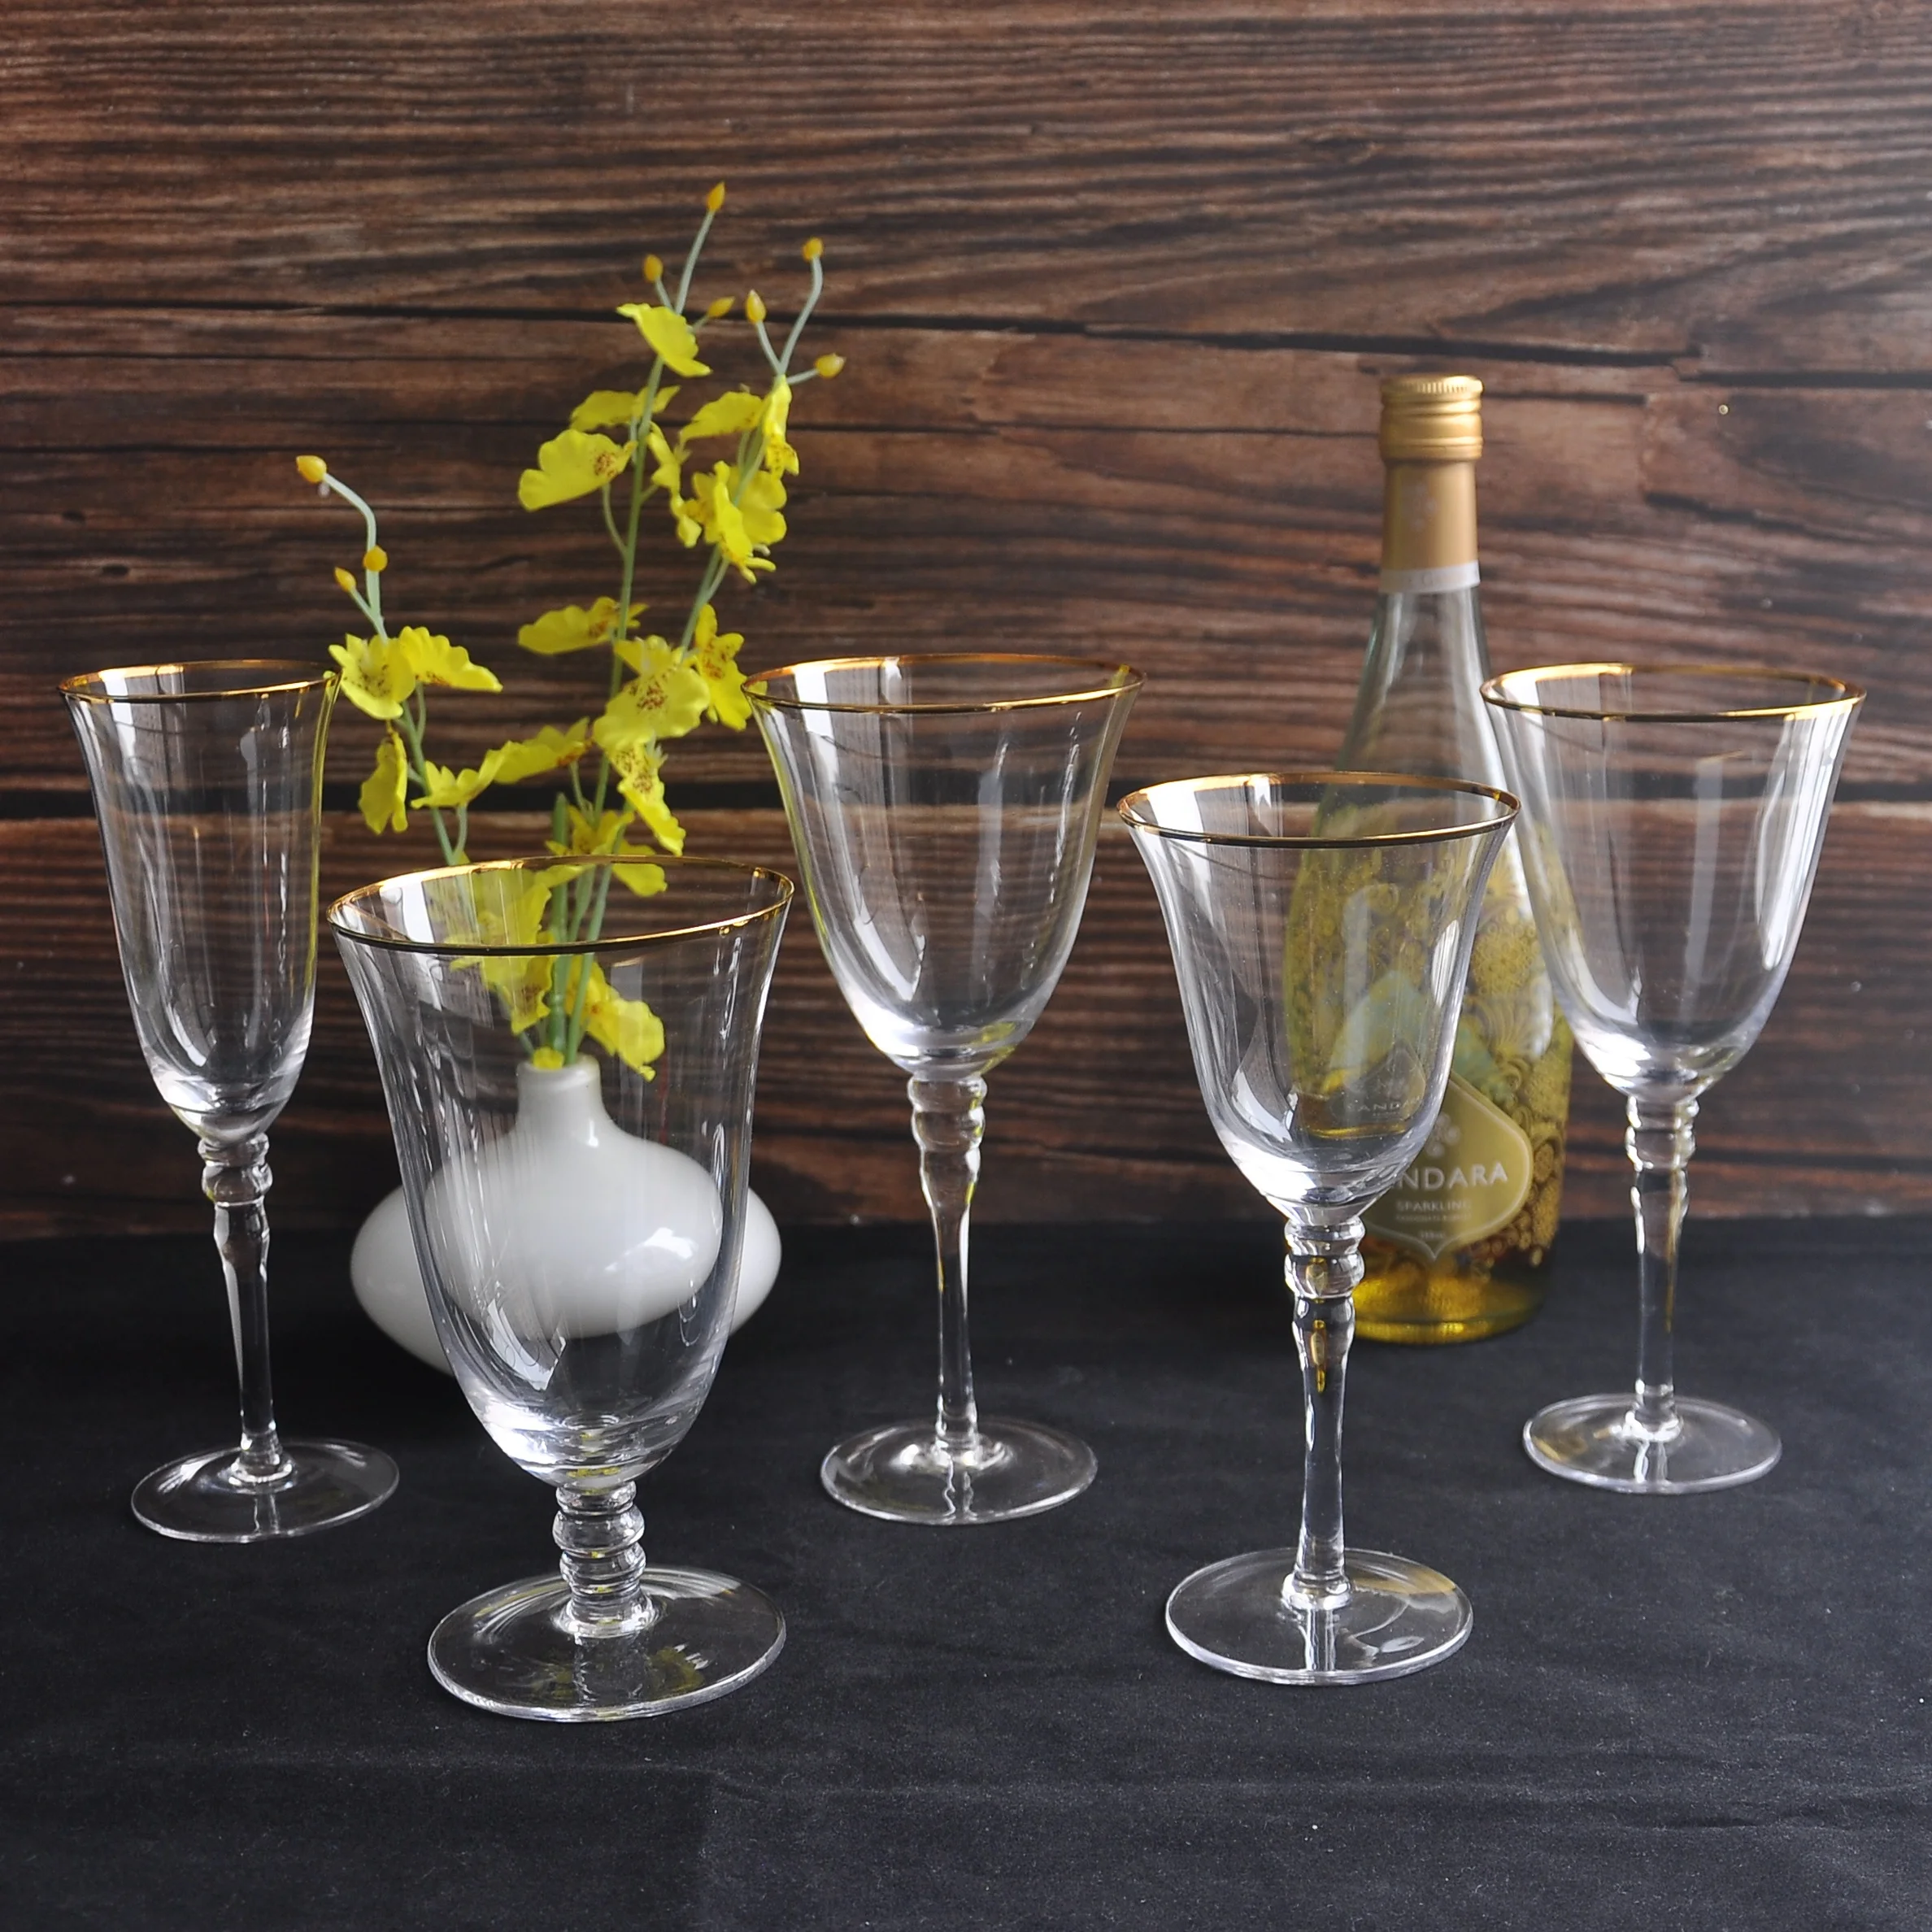 

custom high quality gold rim wedding crystal glass clear goblet wine glasses set champagne flutes banquet